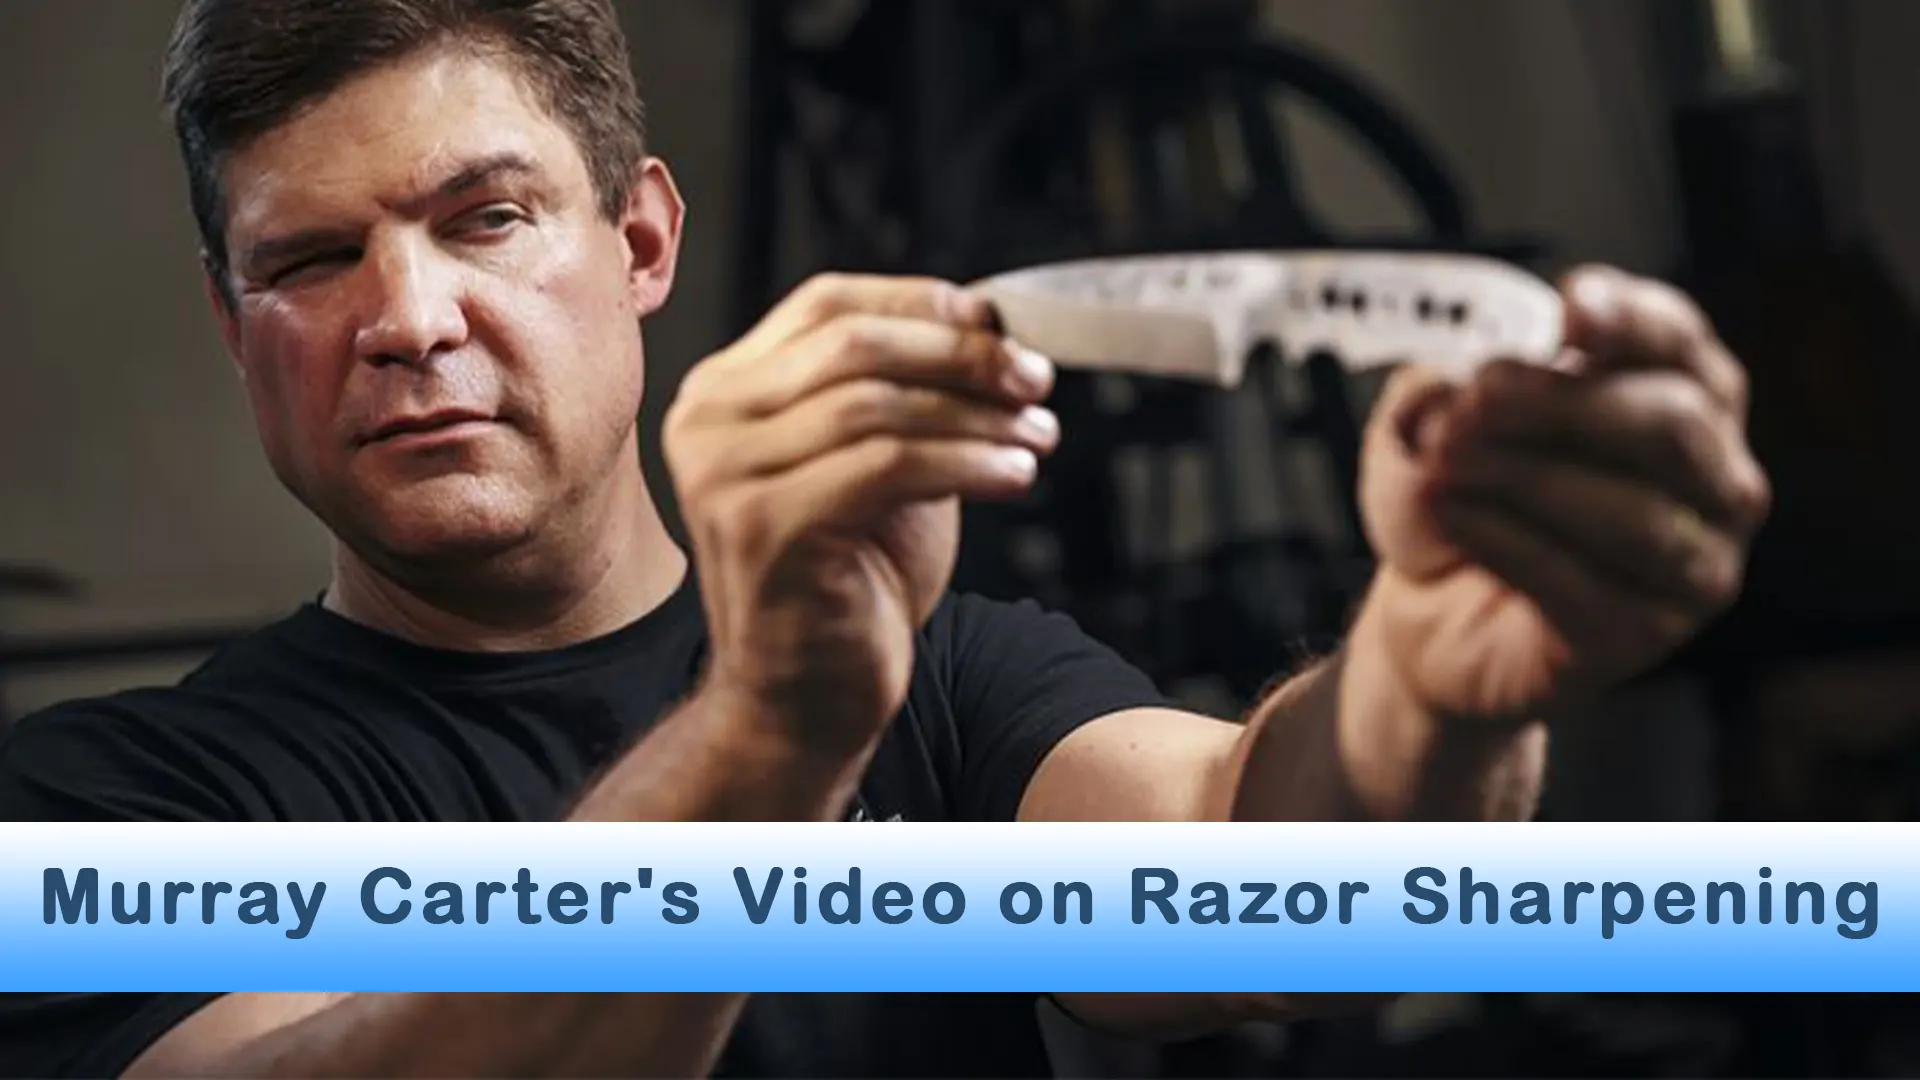 Regarding Murray Carter’s Video on Razor Sharpening